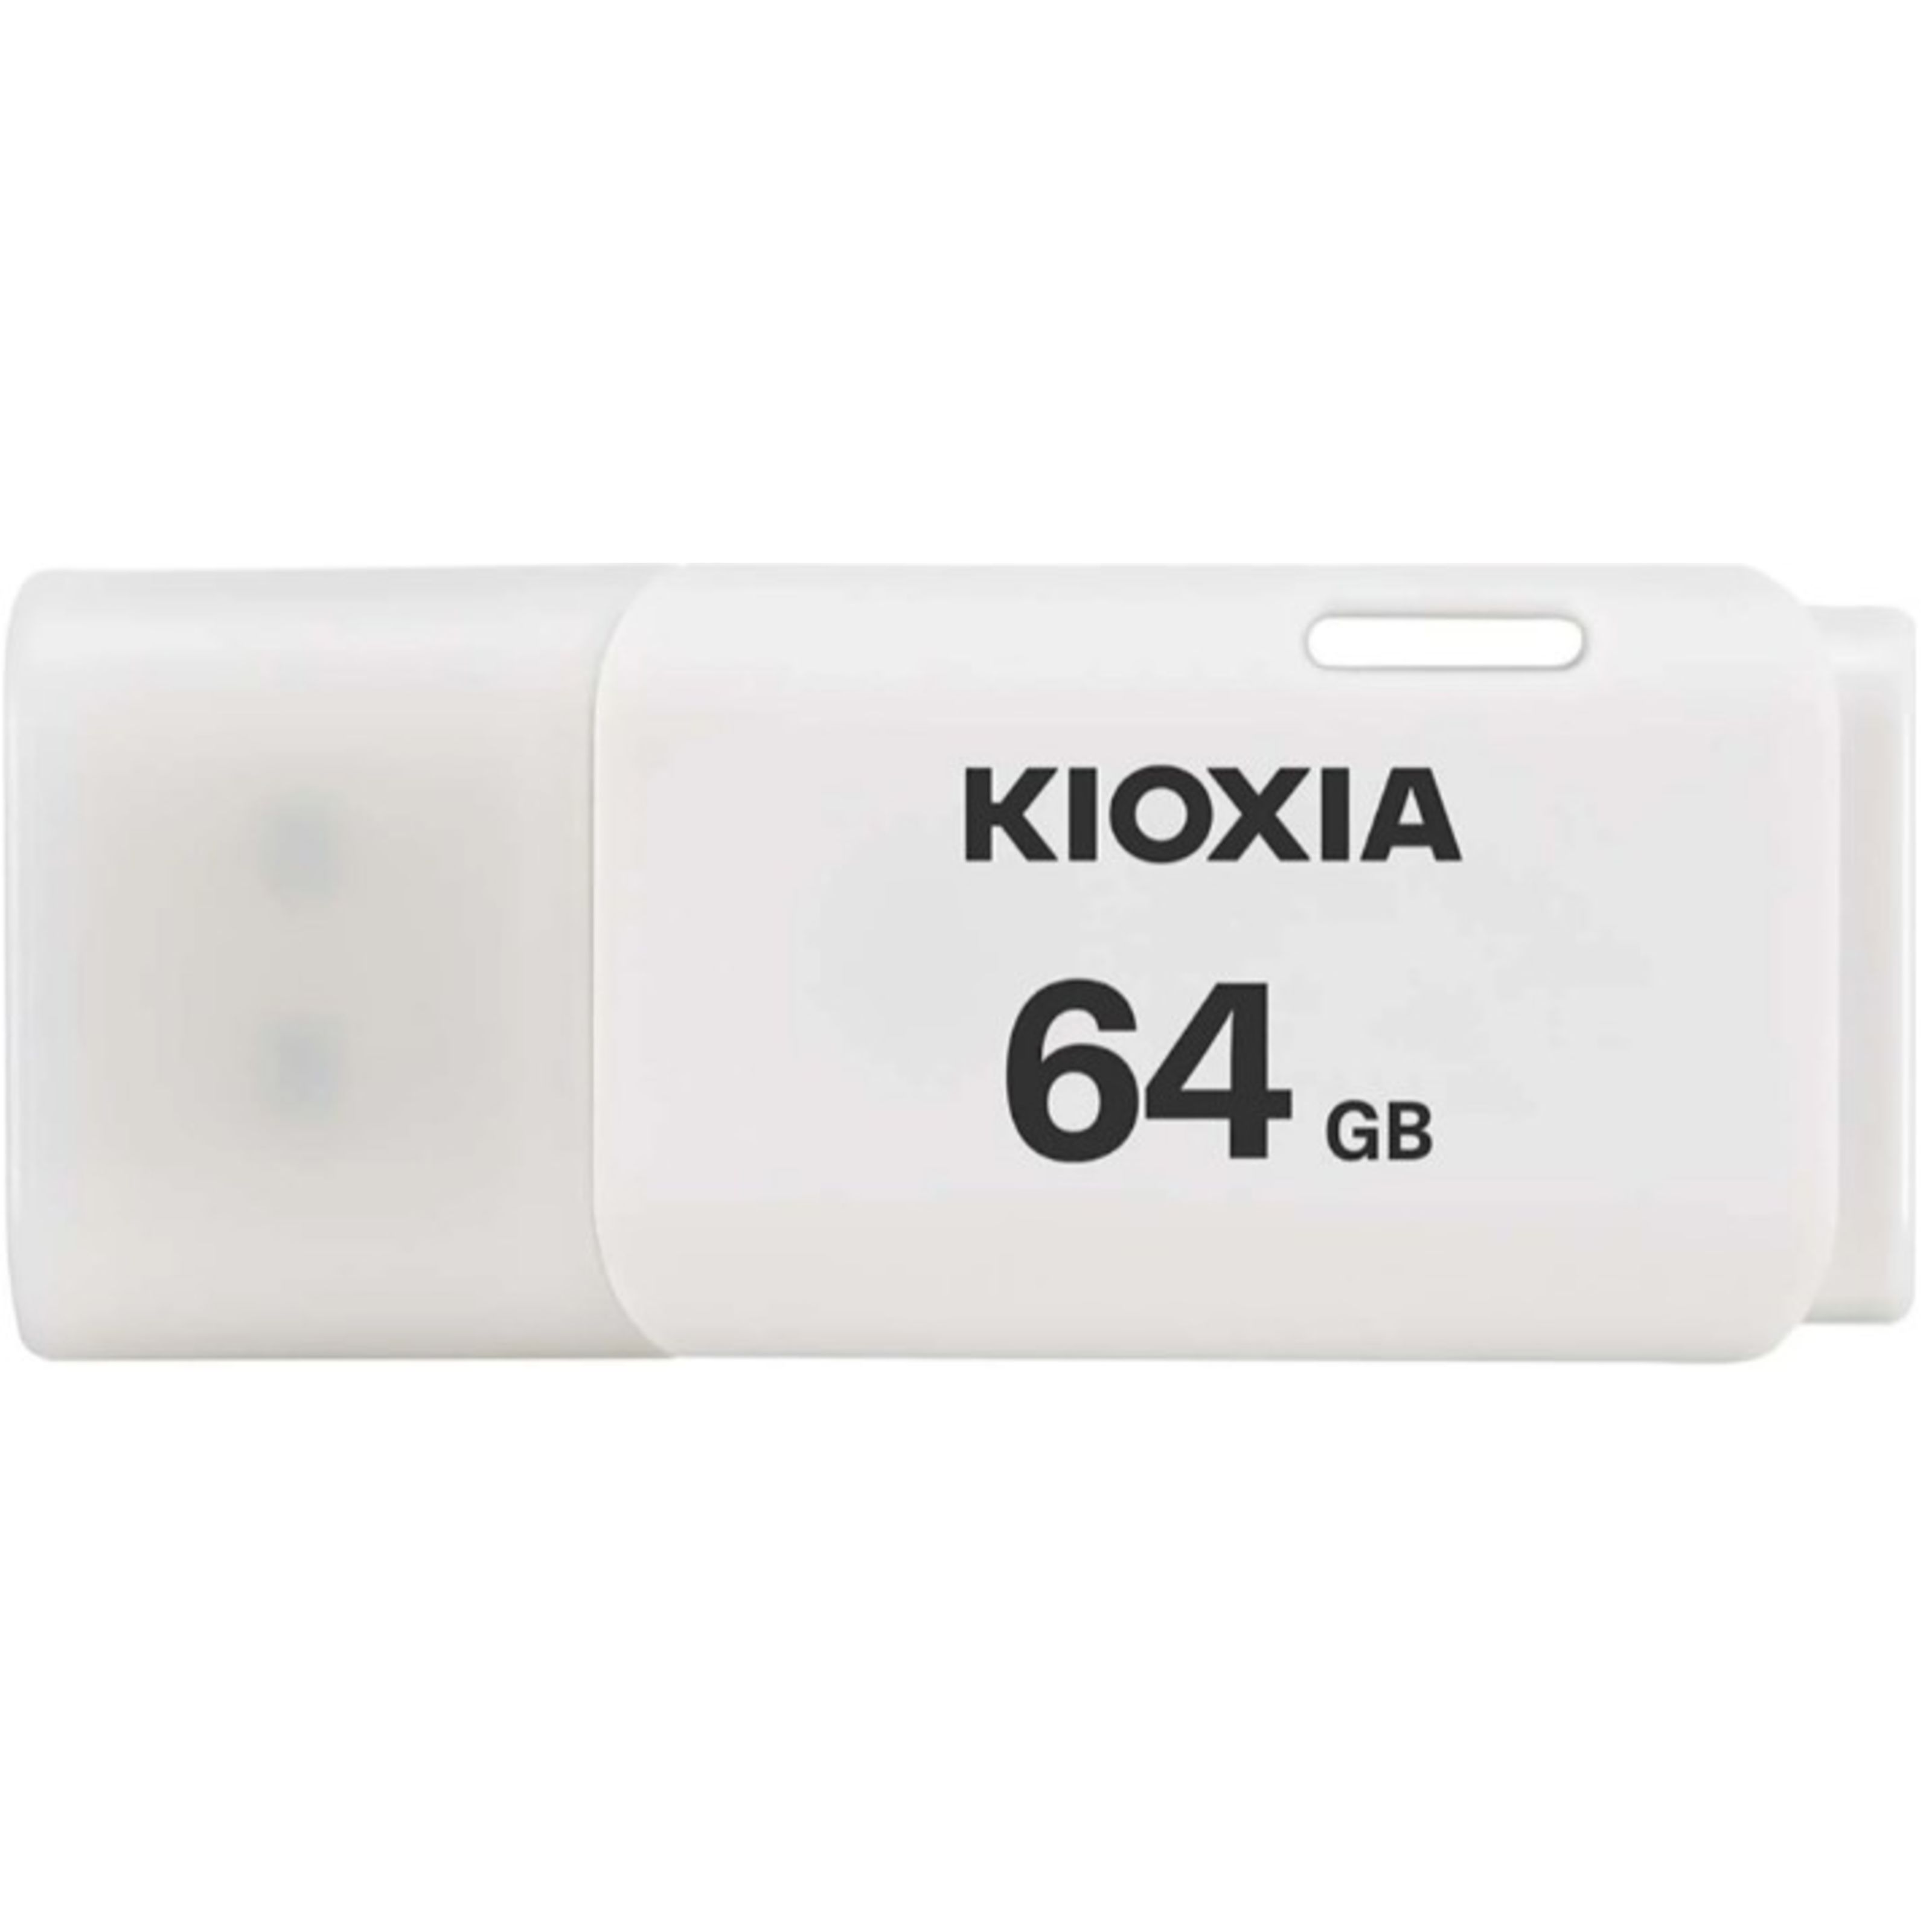 Toshiba Kioxia - USB 3.0 Stick 64GB